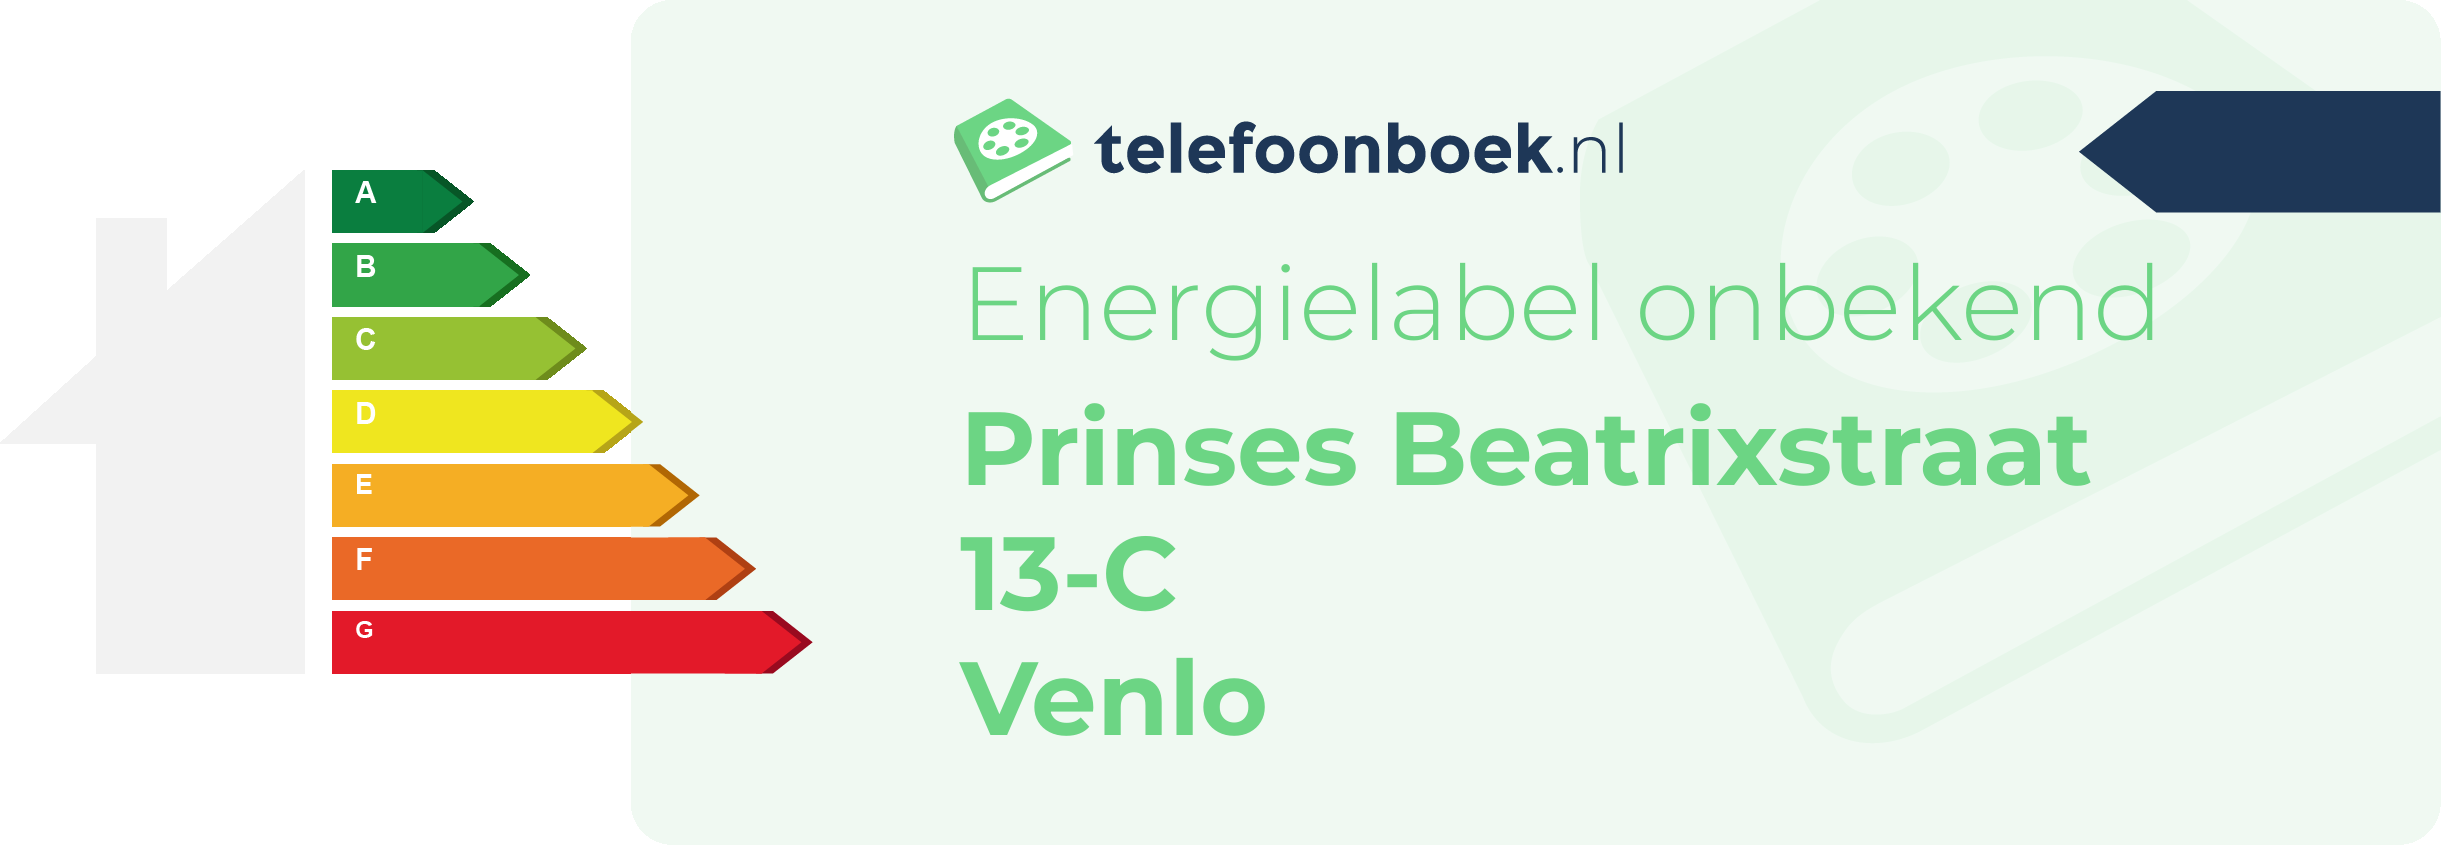 Energielabel Prinses Beatrixstraat 13-C Venlo